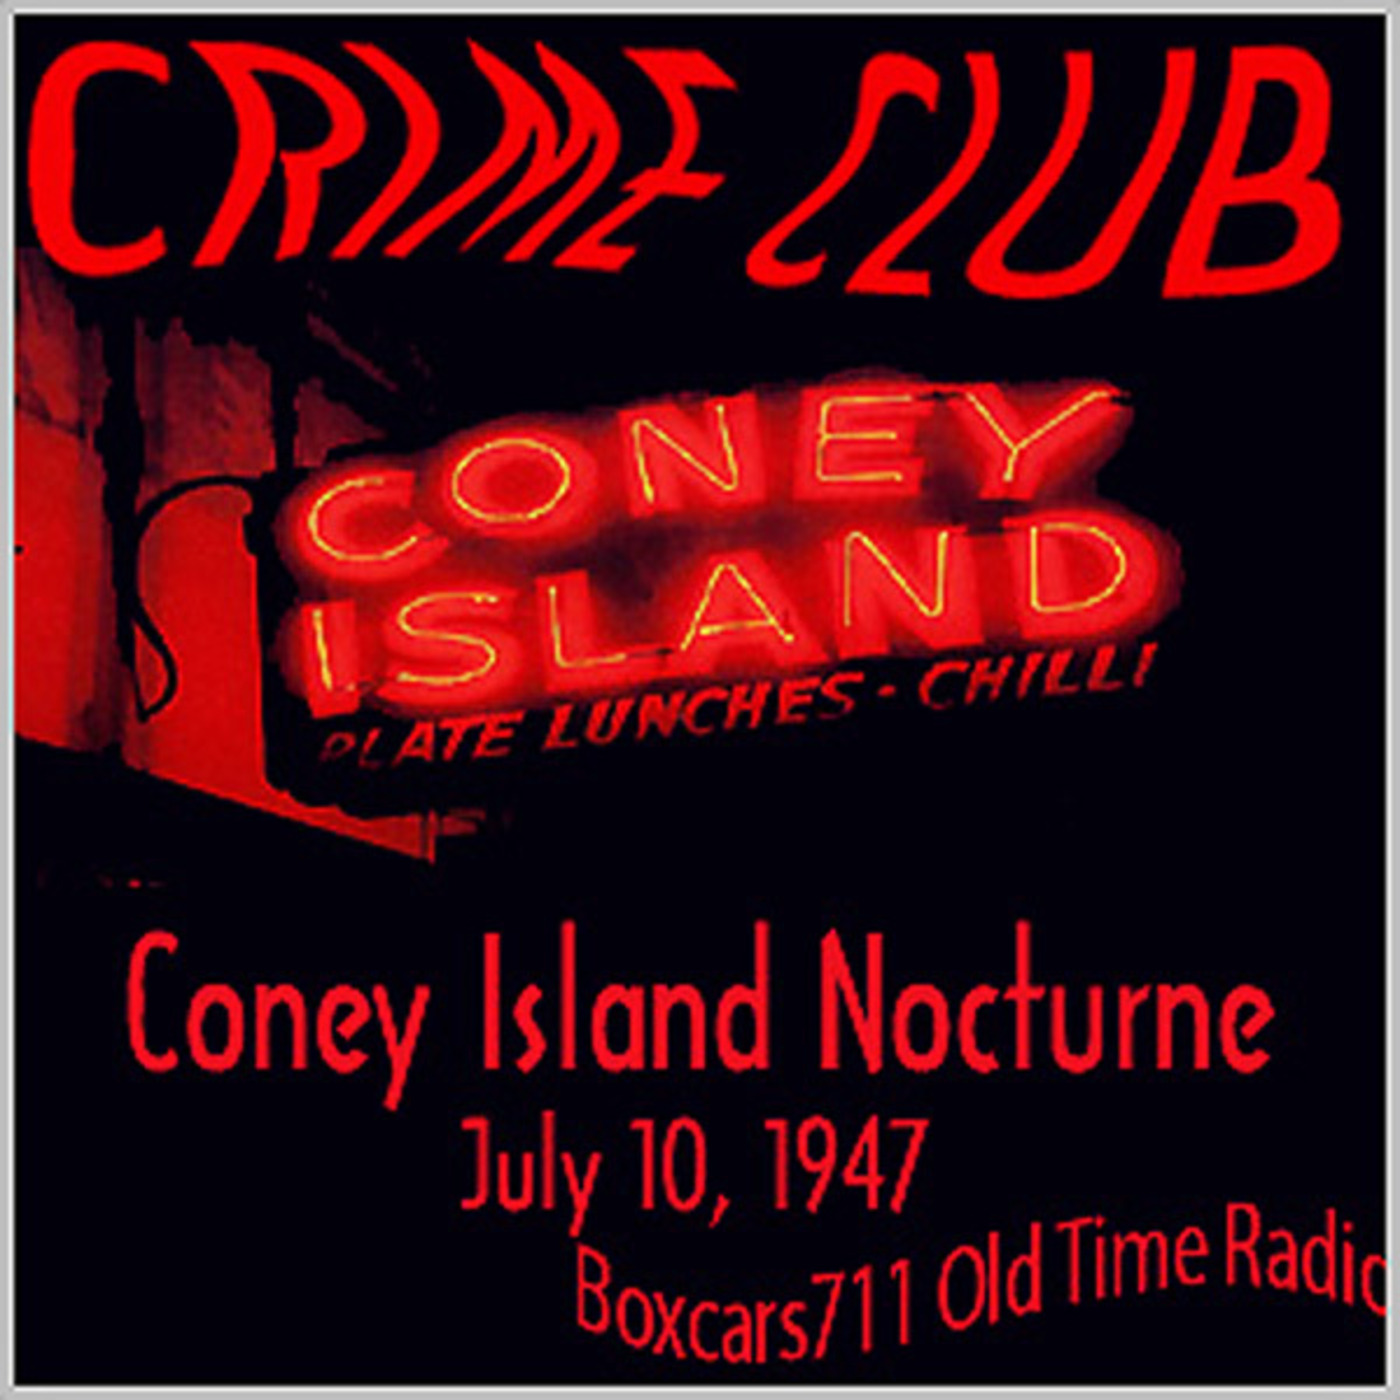 Episode 9625: The Crime Club - 